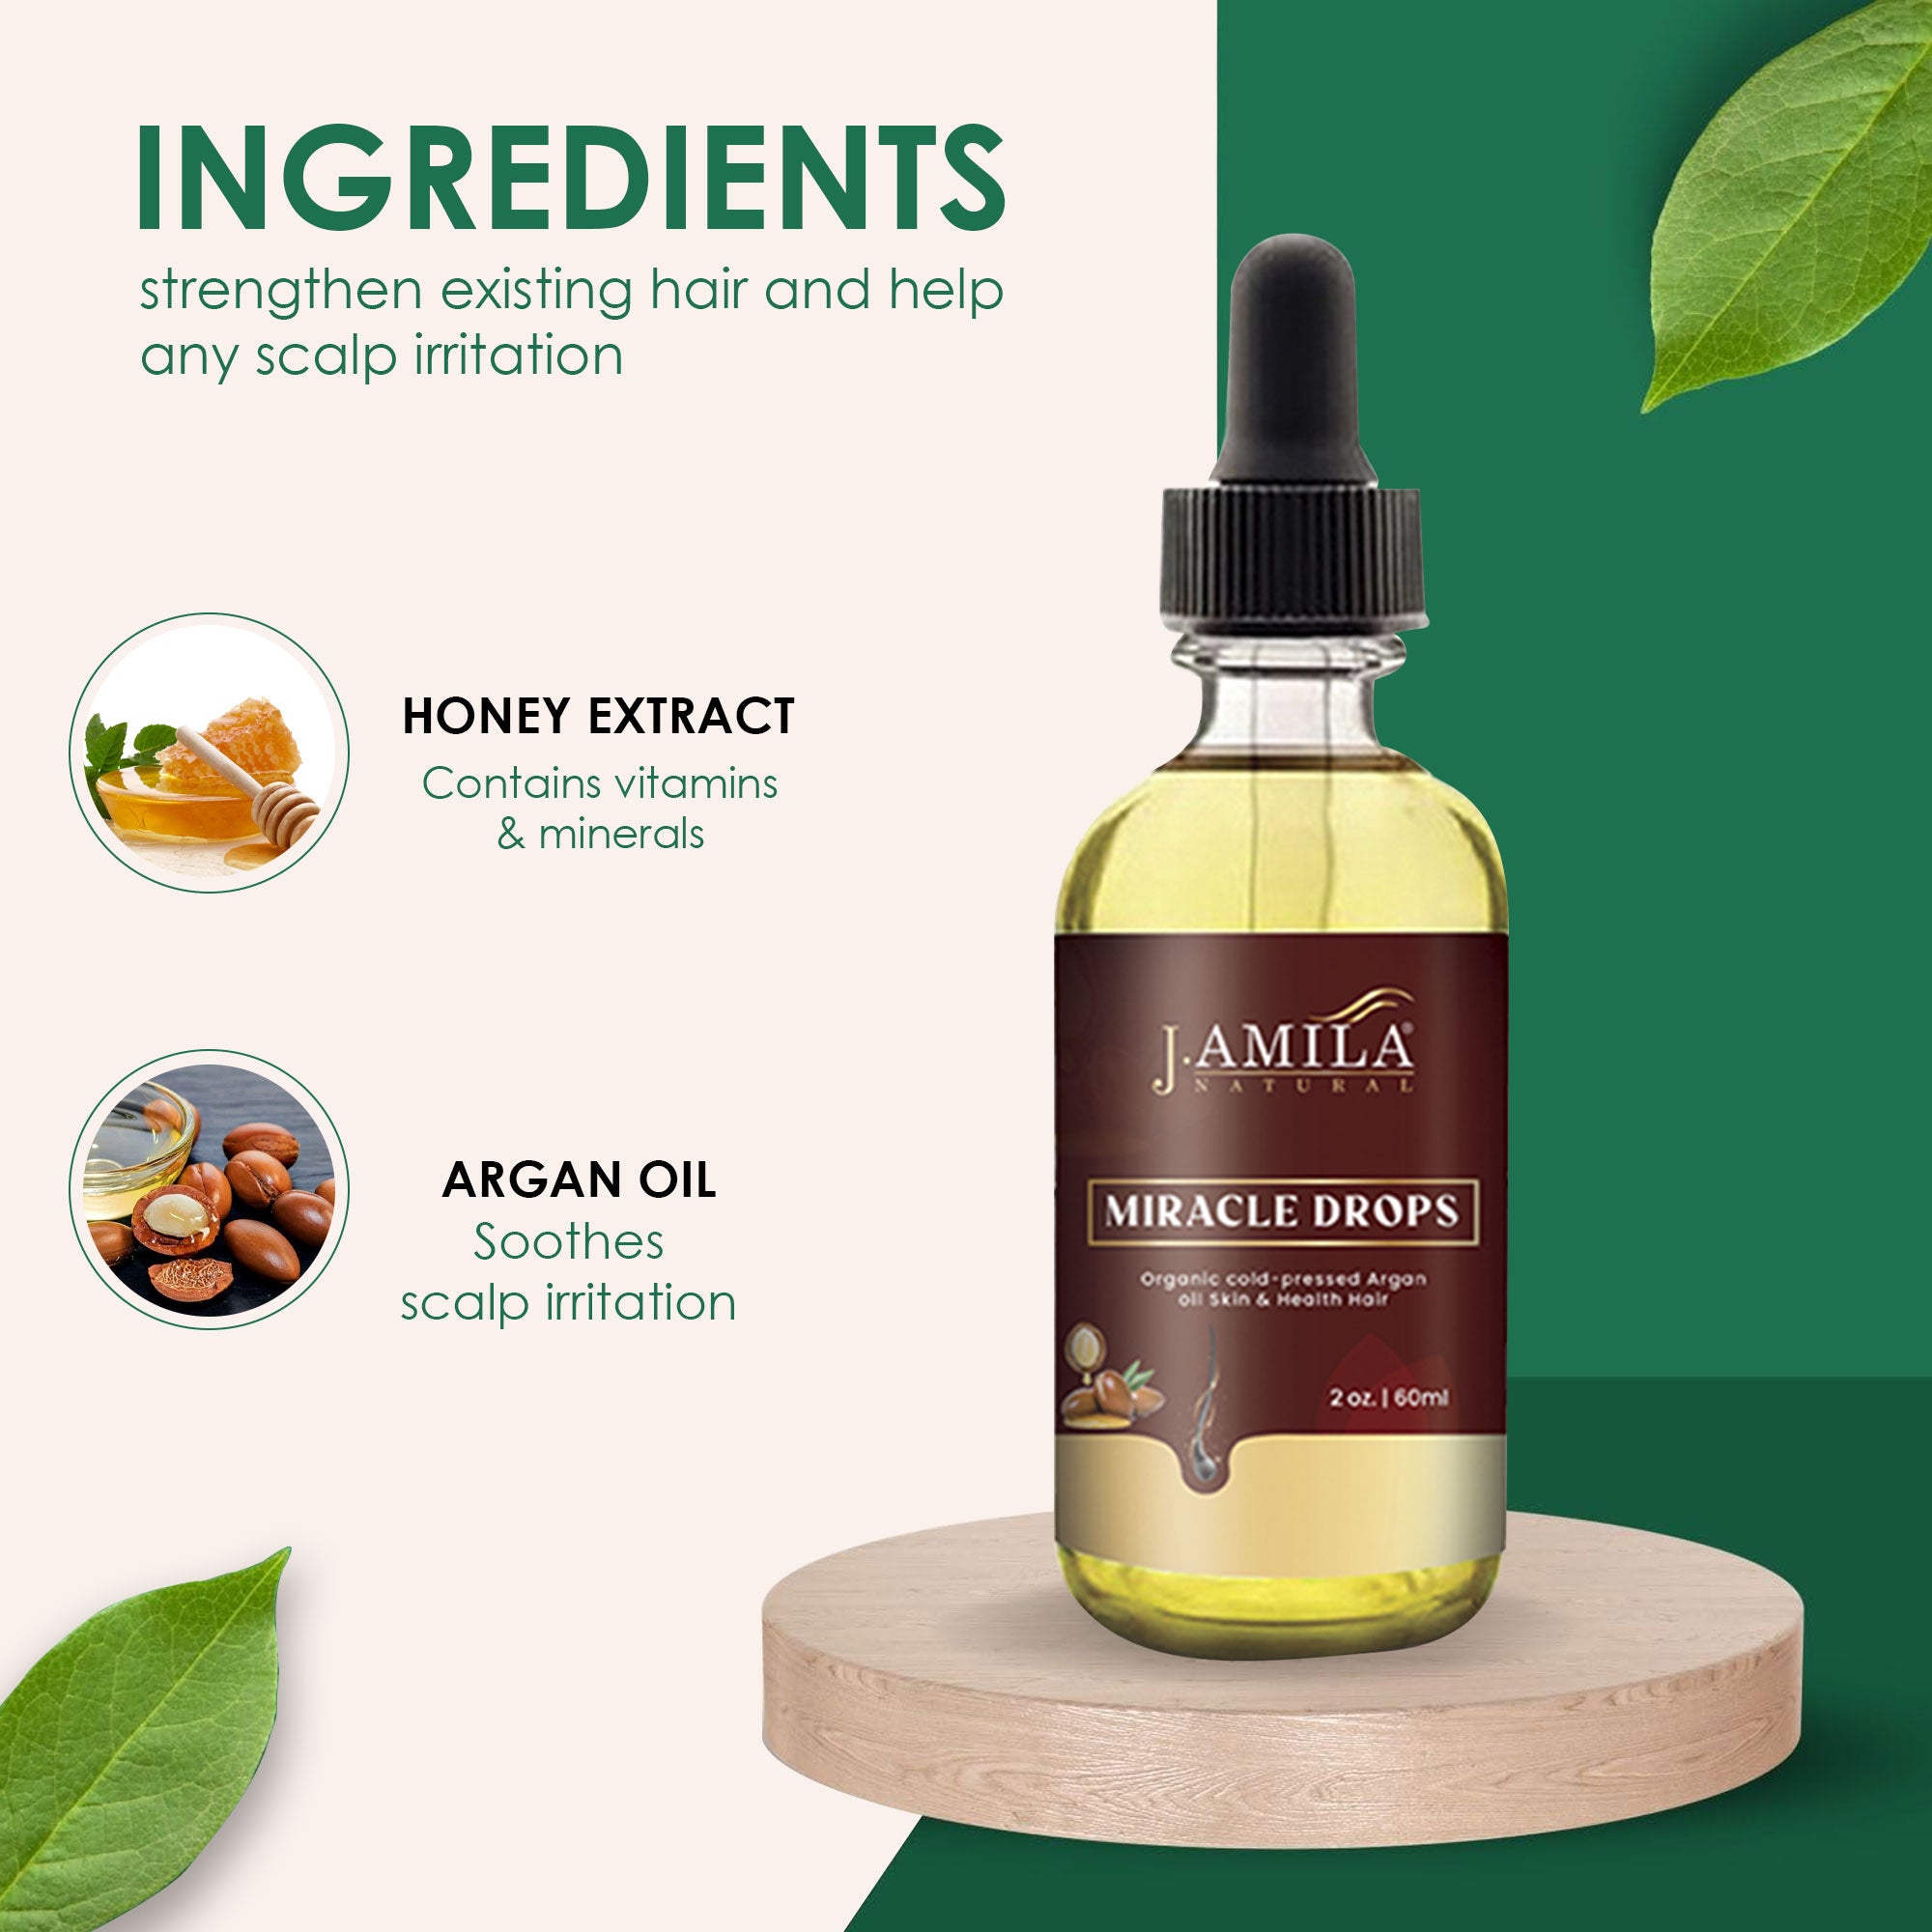 J. AMILA Miracle Drops Organic Cold-Pressed Argan Oil (2oz)